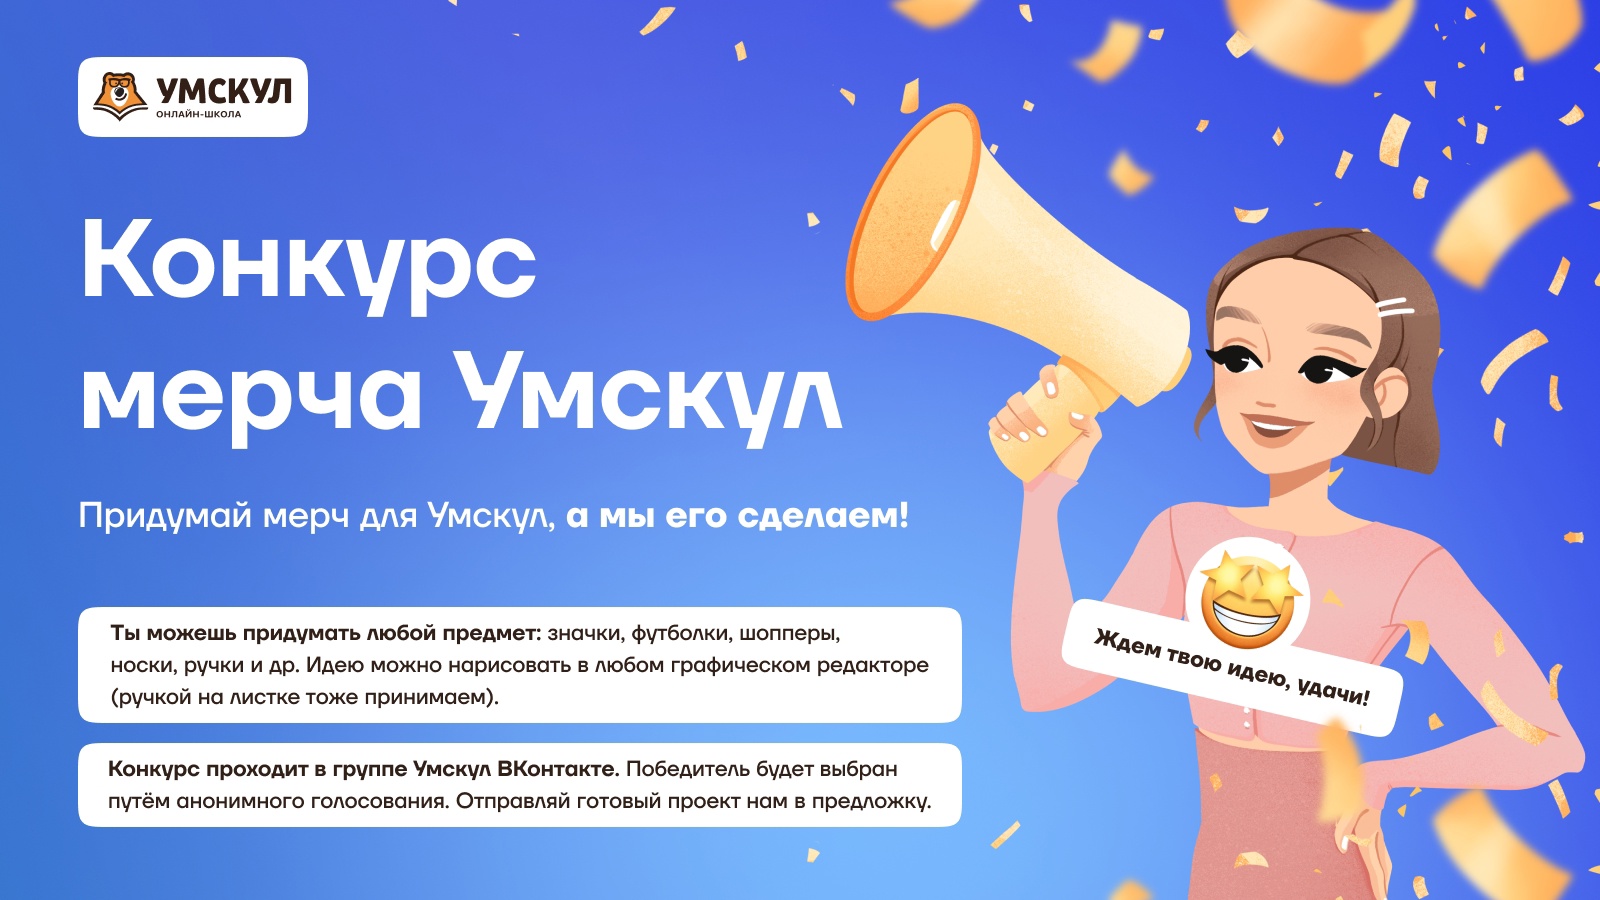 Зачем вести блог во ВКонтакте